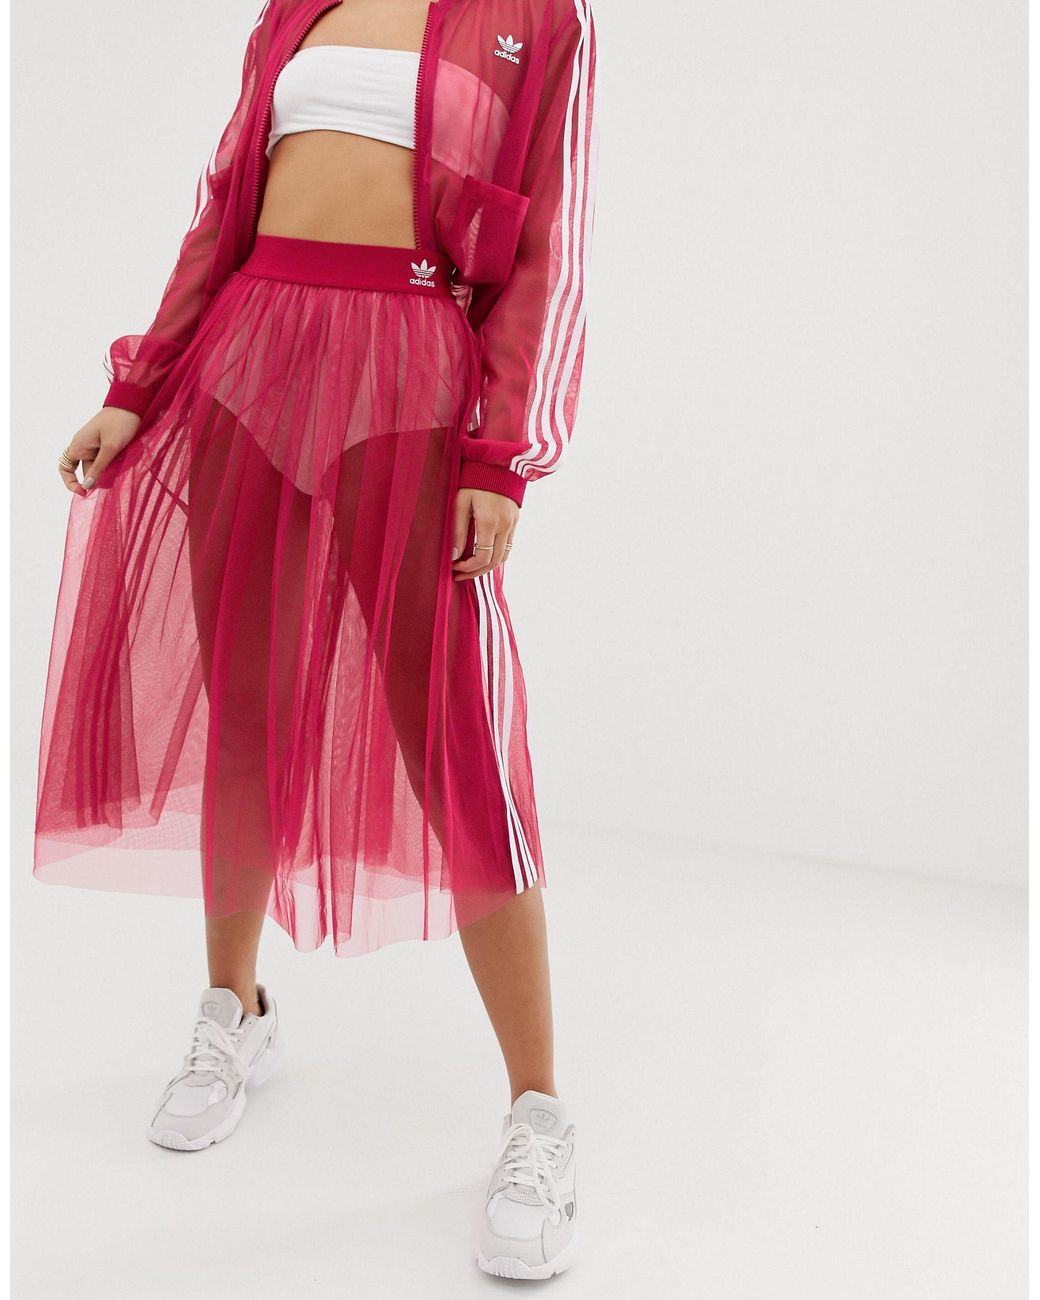 adidas Originals Three Stripe Tulle Skirt in Pink